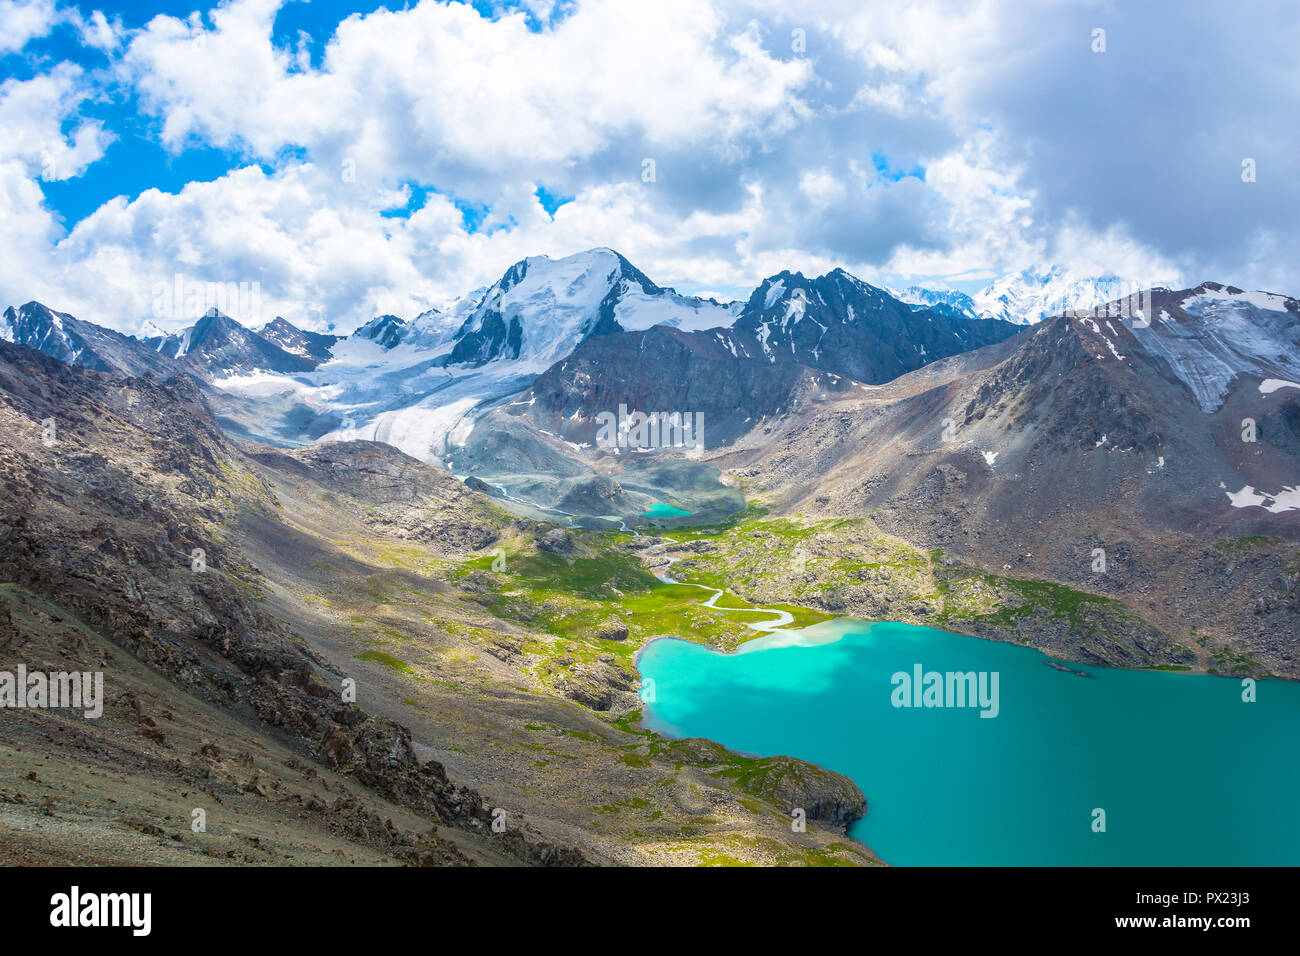 Schöne Landschaft mit Smaragd - Turquoise Mountain Lake Ala-Kul, Kirgisistan. Stockfoto